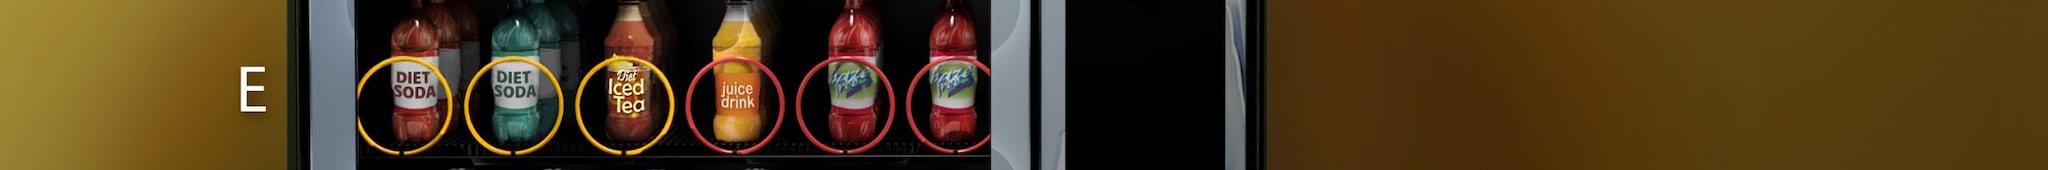 Row E - Beverage vending machine